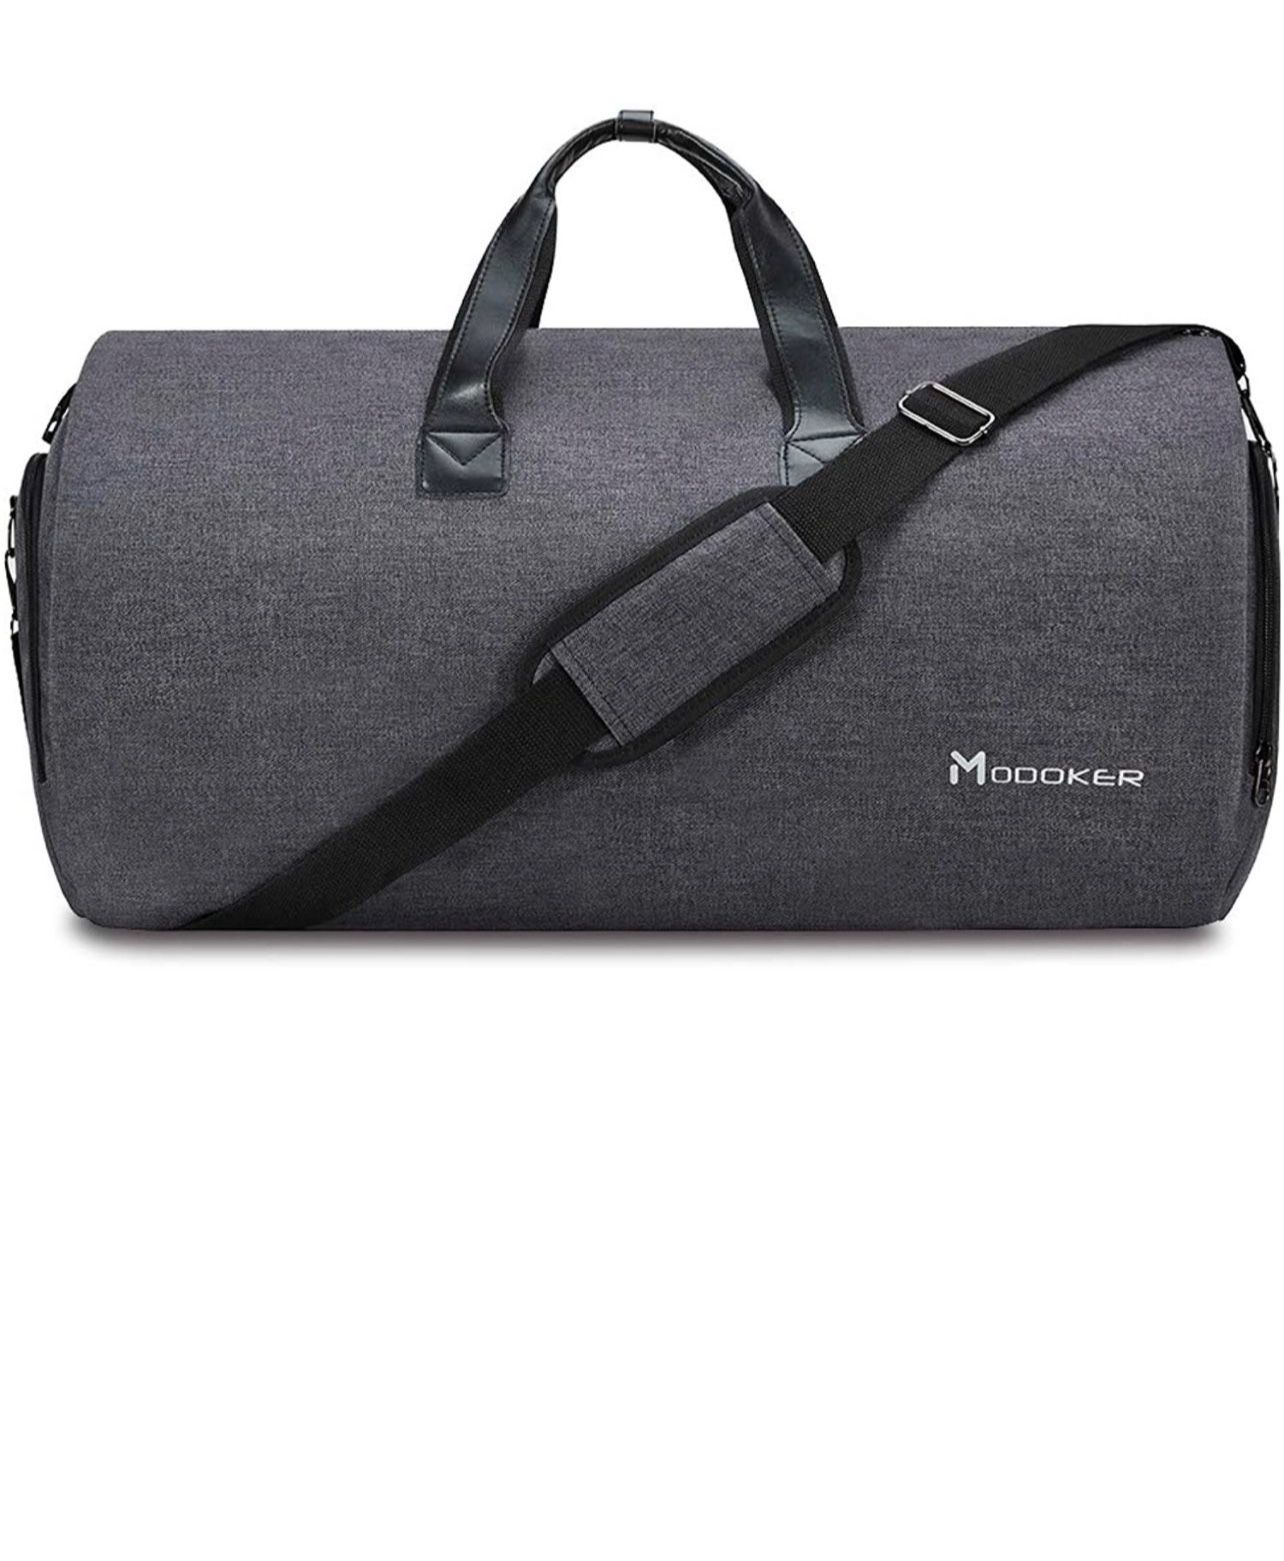 New Modoker Convertible Garment Bag Suit Travel Bag Black